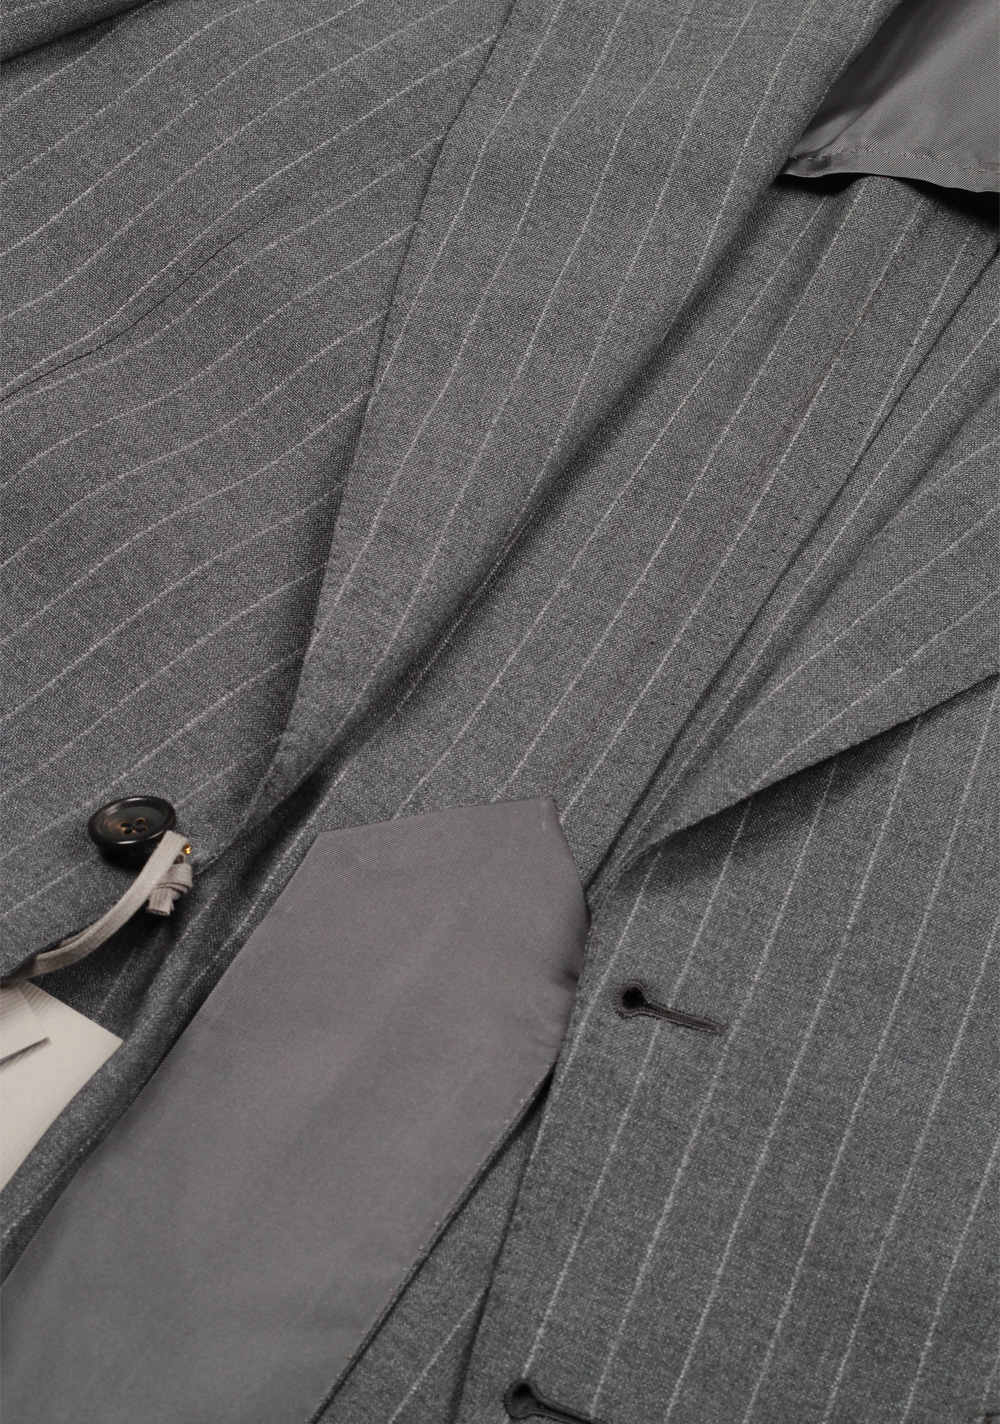 TOM FORD Shelton Striped Gray Suit Size 46 / 36R U.S. | Costume Limité